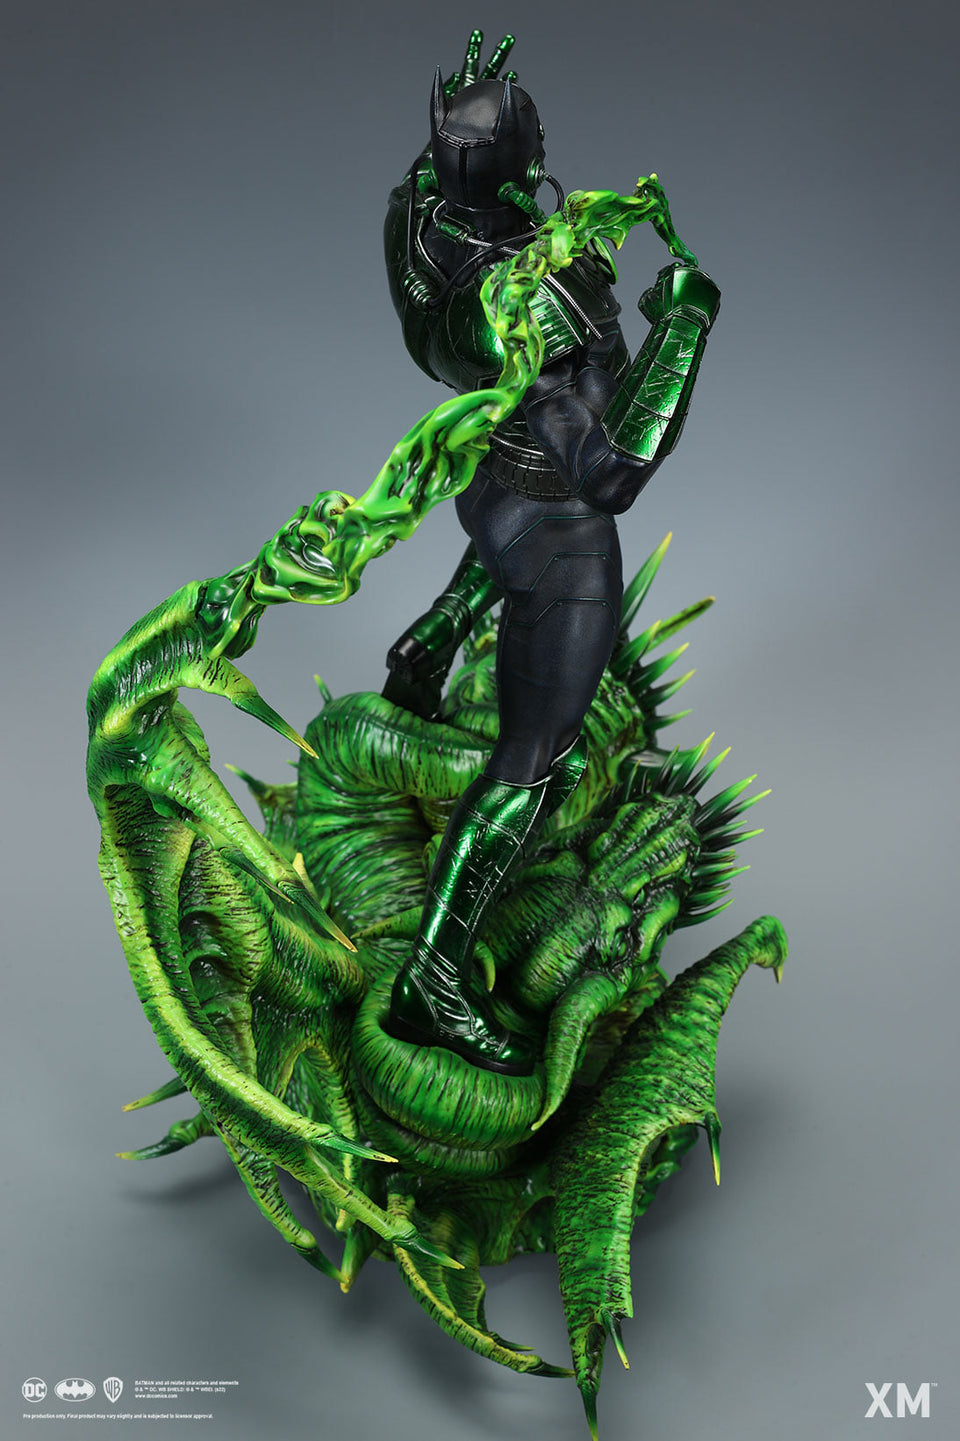 XM Studios Dawnbreaker (Dark Nights: Metal Series) 1/4 Scale Statue